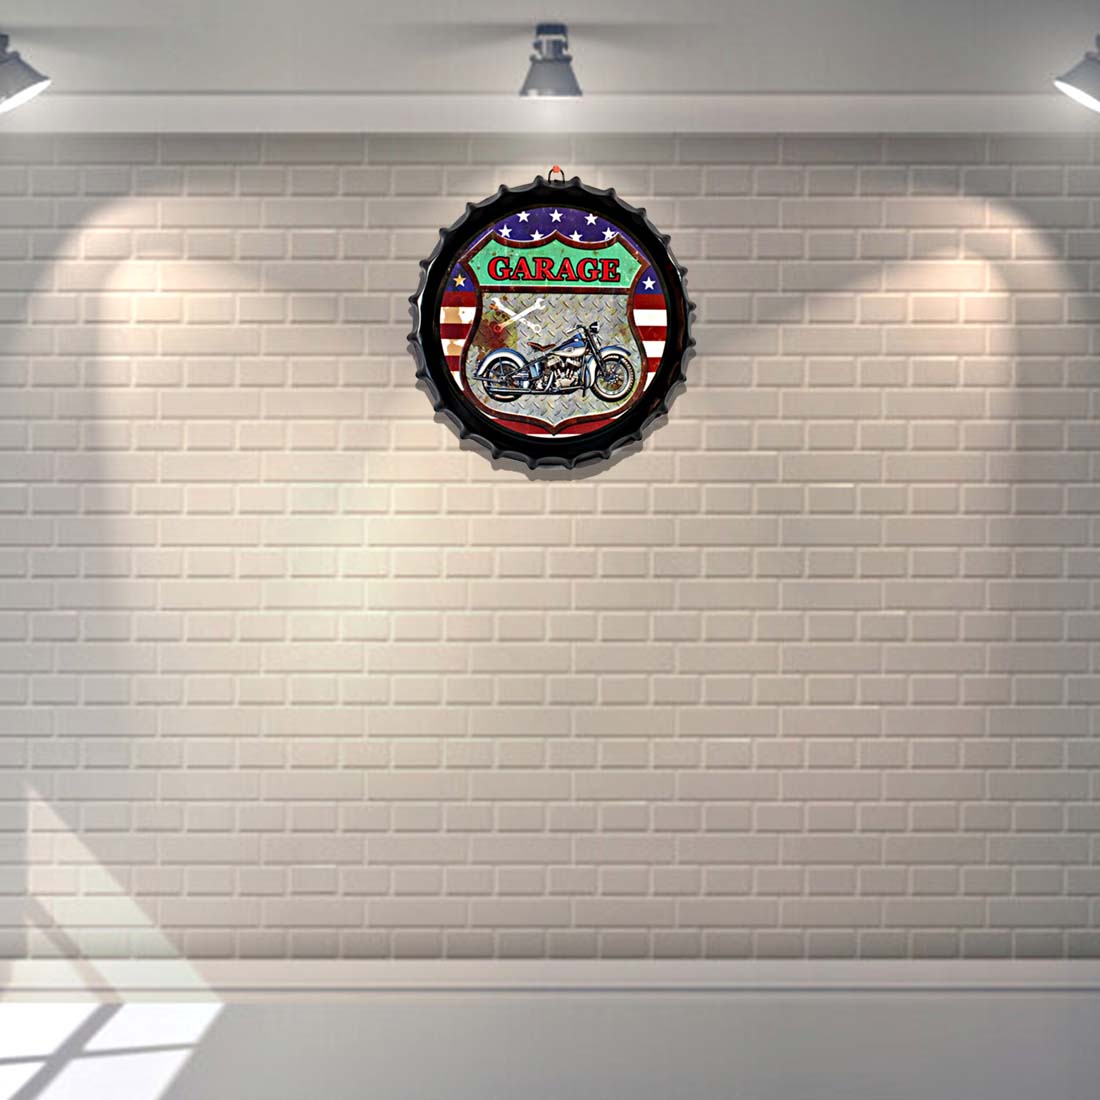 ORKA Medium Metal Tinplate Beer Bottle Caps Wall Hangings For Pubs, Restaurants And Home Decor (Garage)  